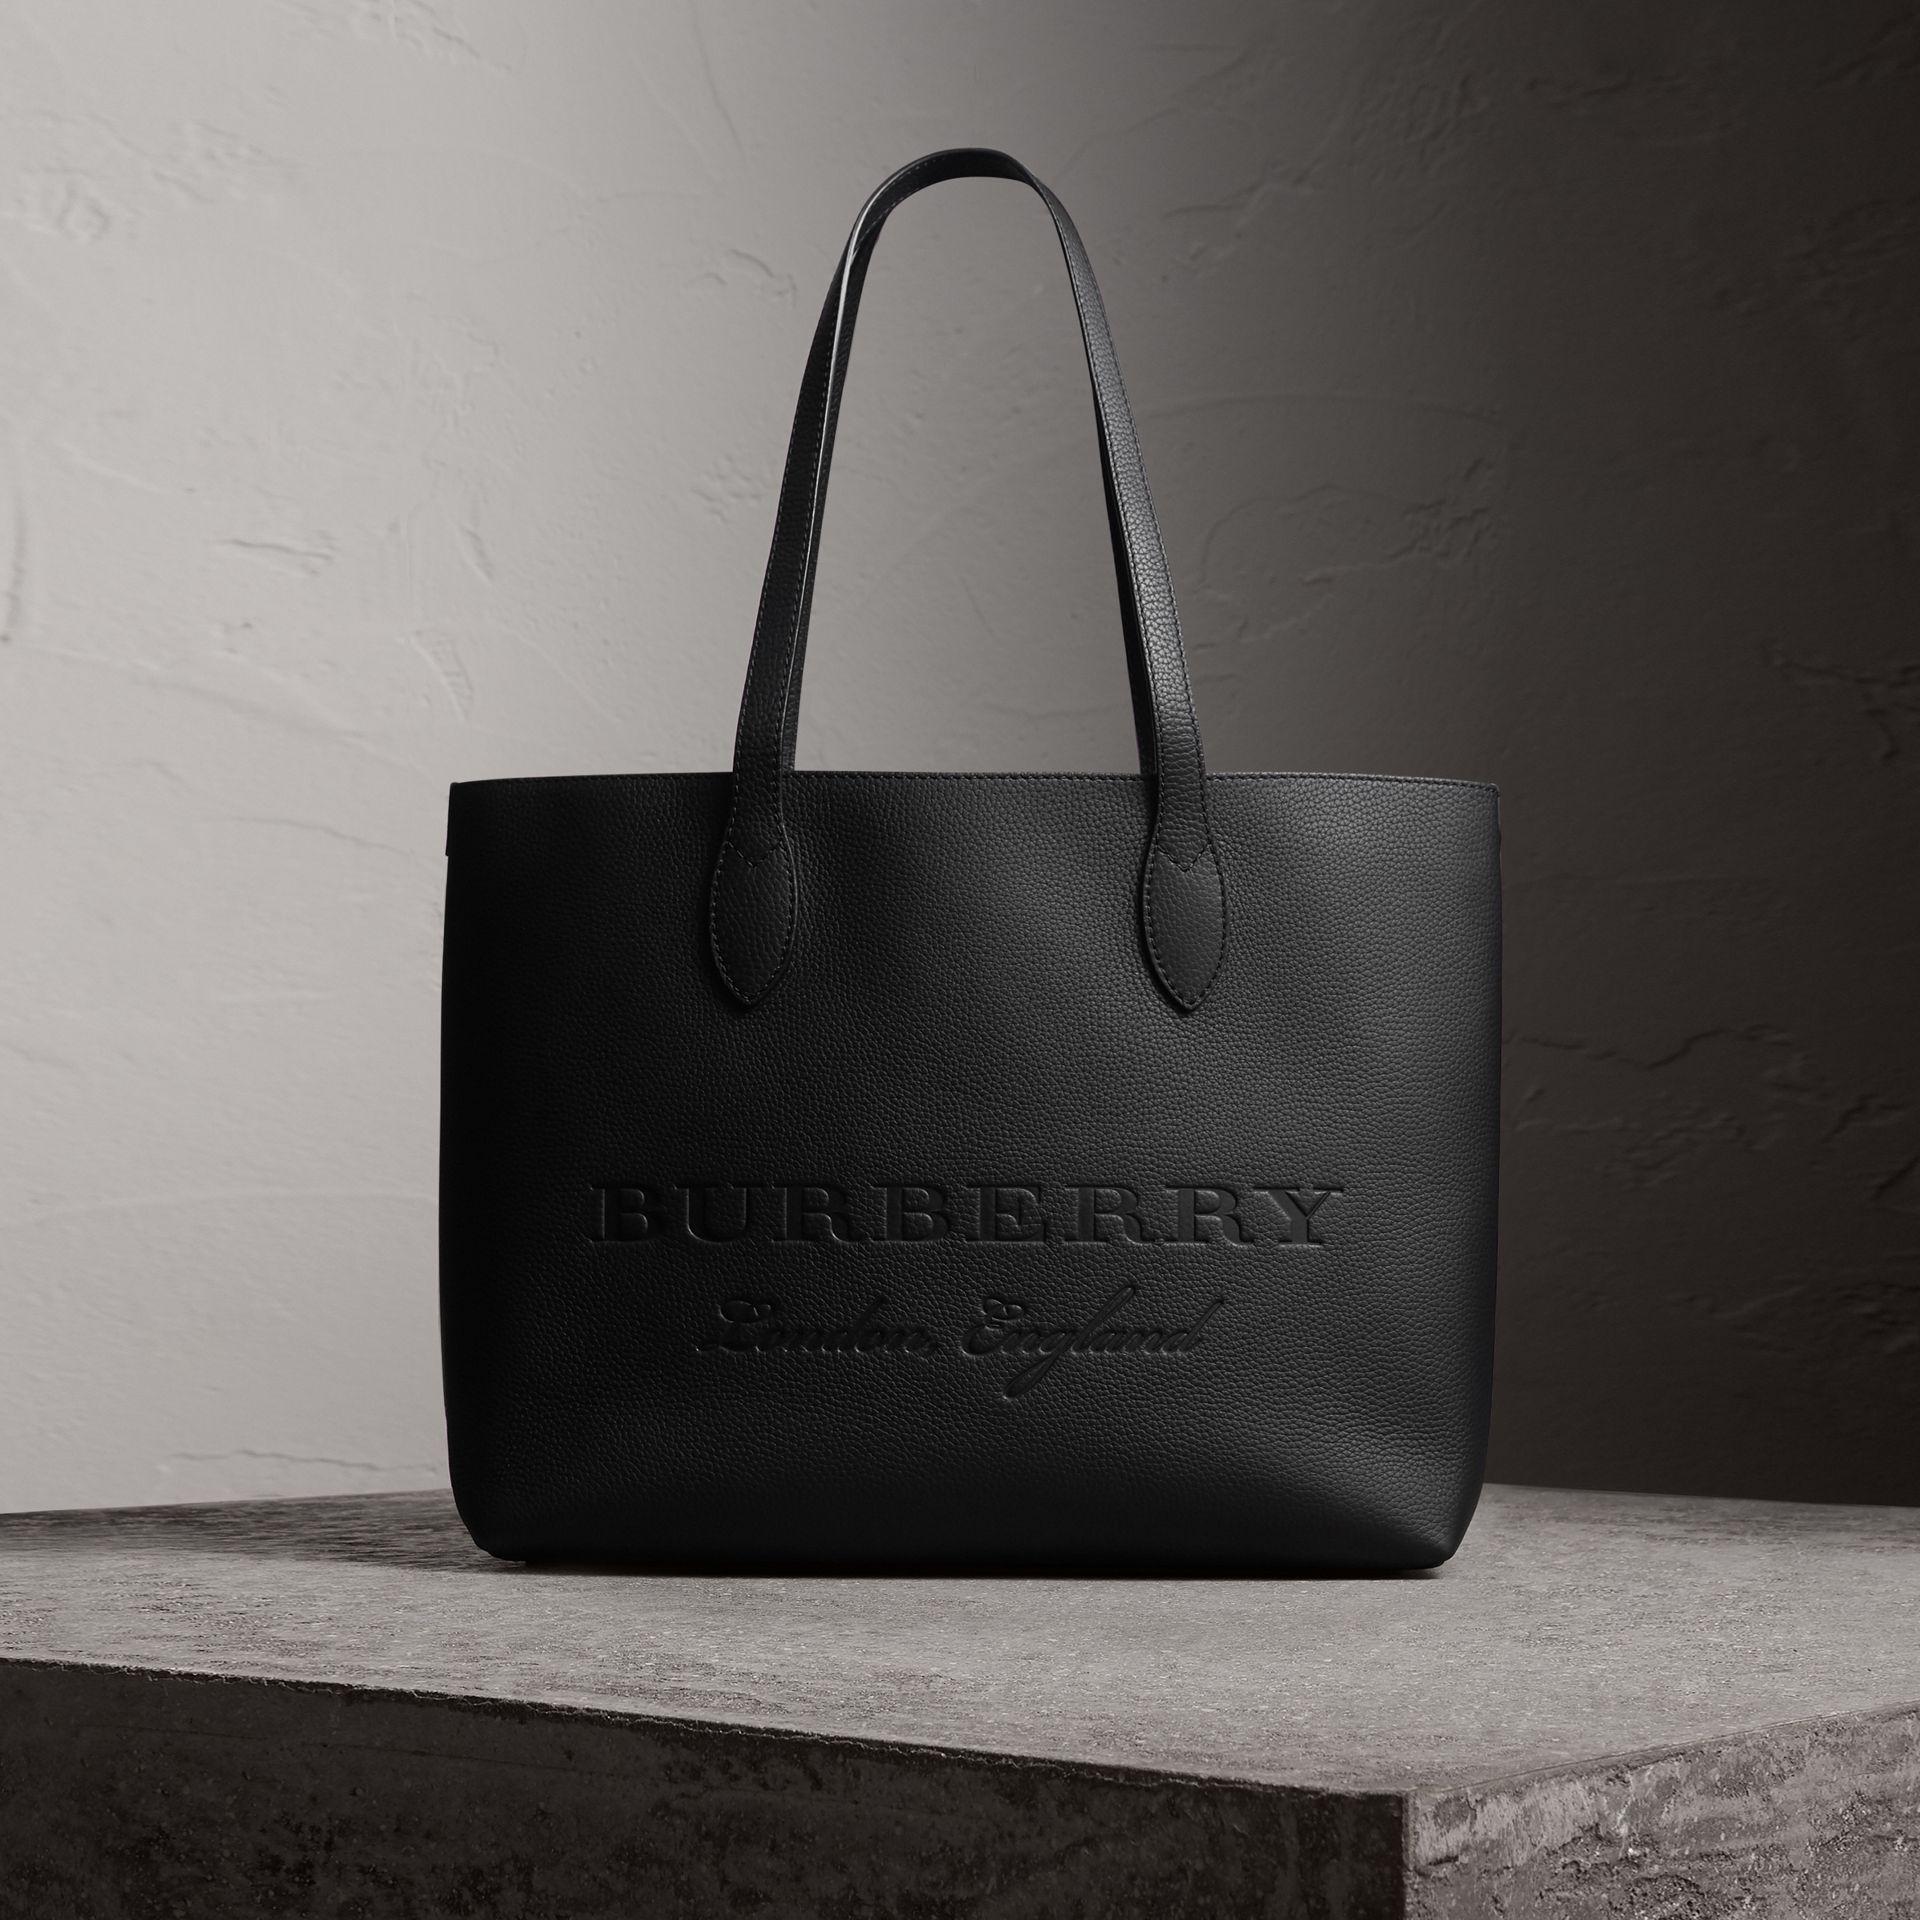 Burberry Medium Embossed Leather Tote in Black